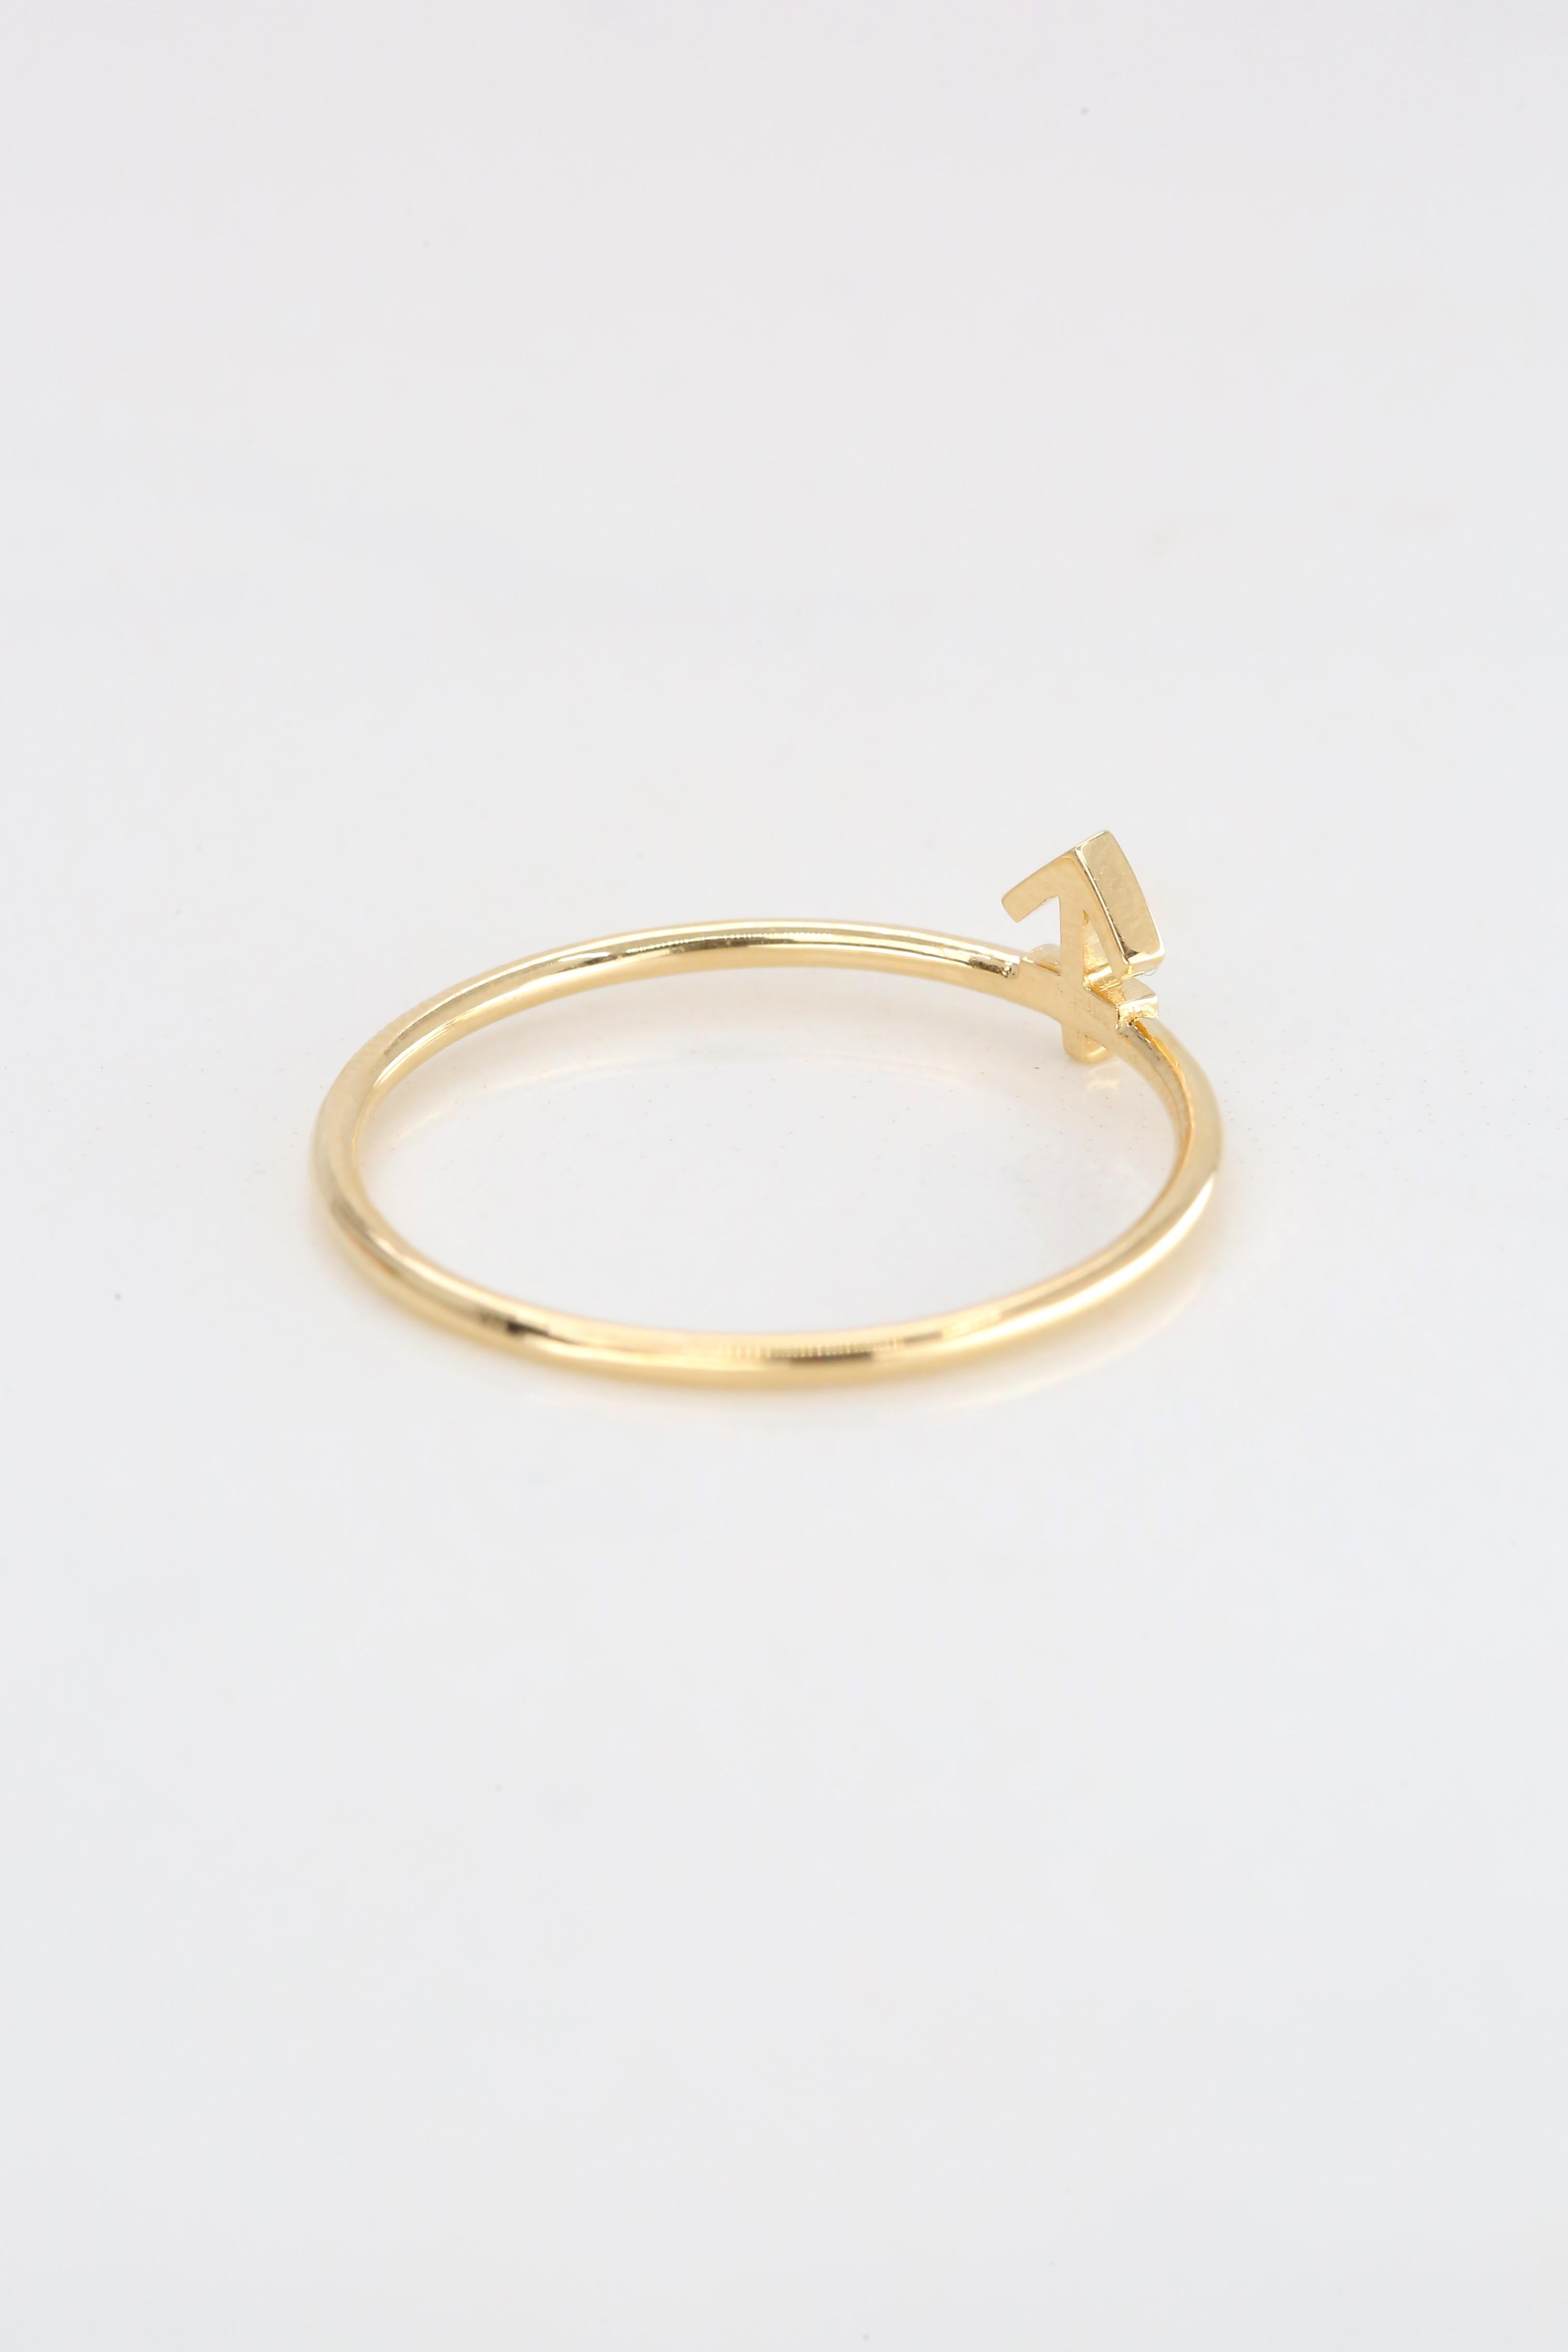 For Sale:  14K Gold Sagittarius Ring, Sagittarius Sign Gold Ring 7